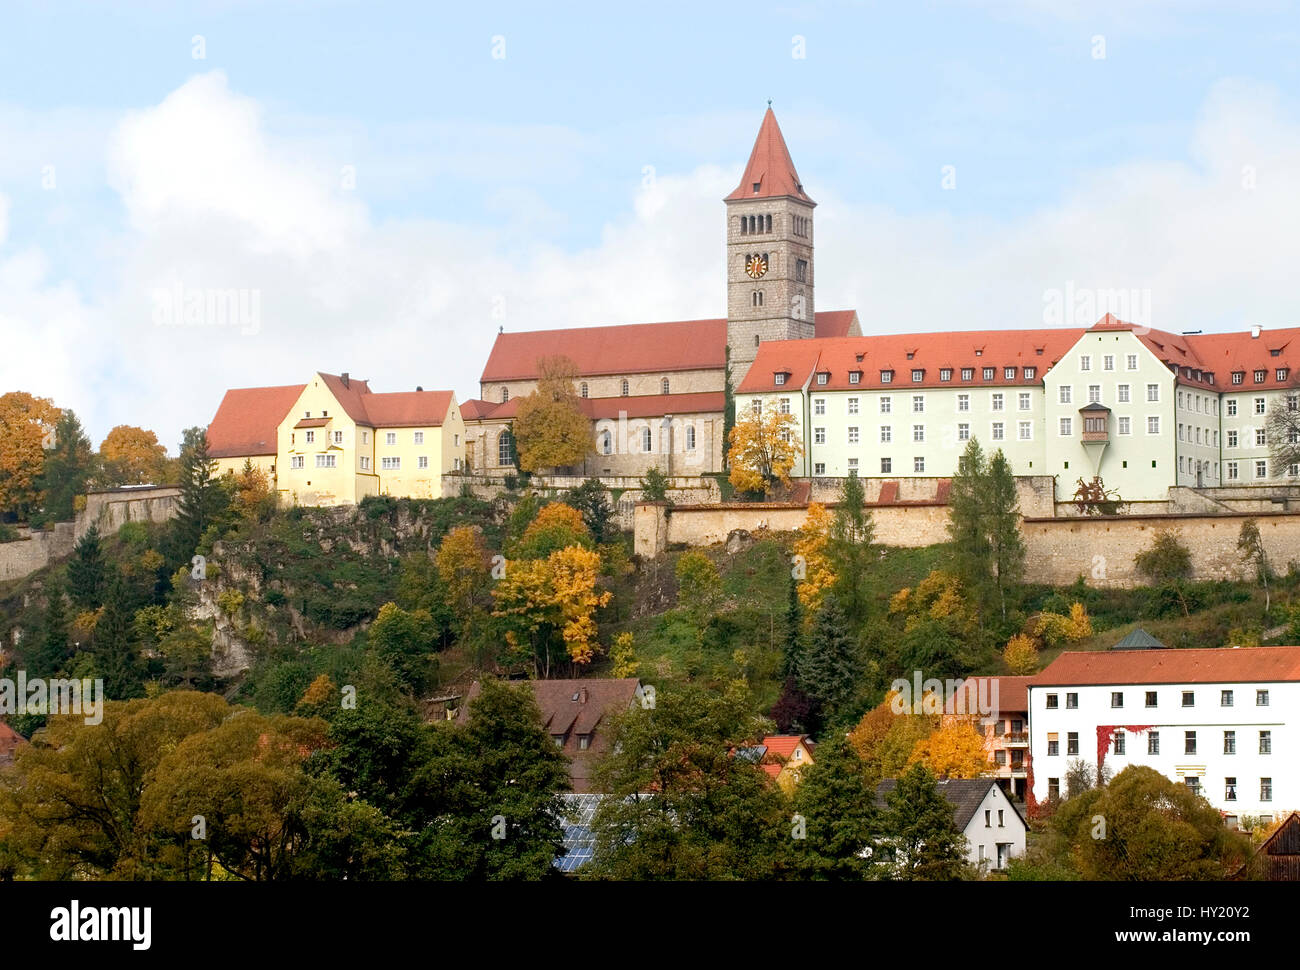 Image of the Castle Monastery in Kastl in the German state of Bavaria.  Blick auf das Klosterschloss Kastl in Bayern, Deutschland. Stock Photo